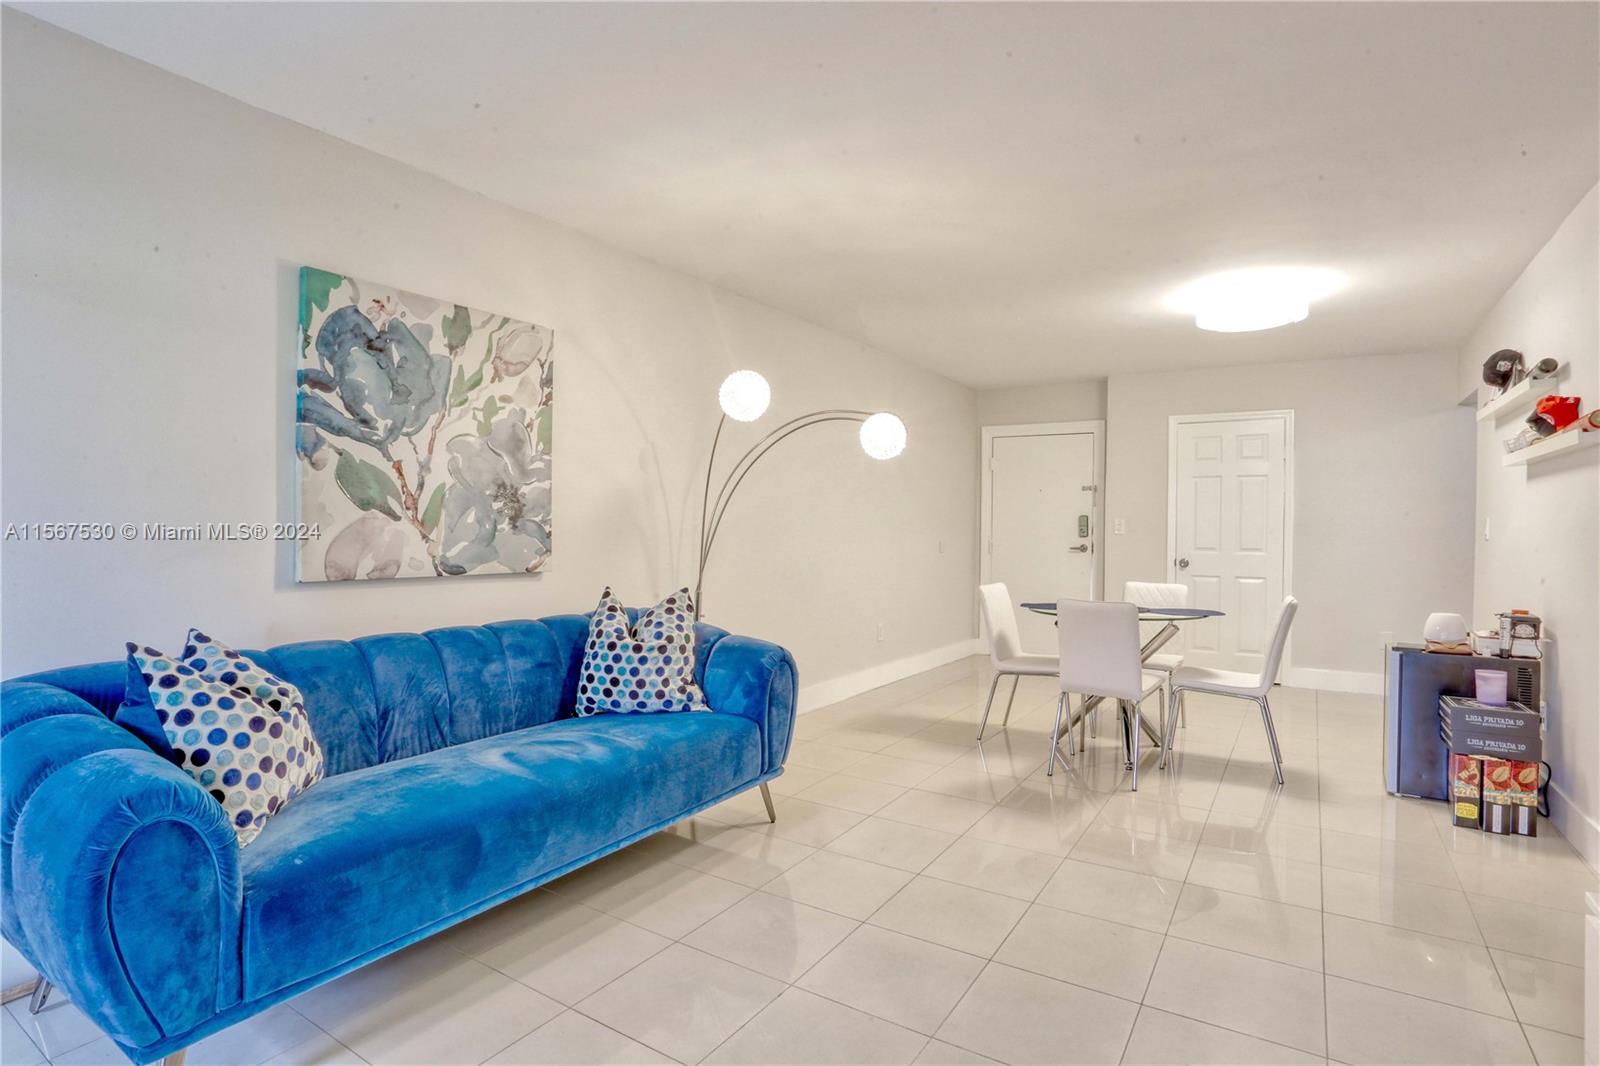 Rental Property at 9170 Fontainebleau Blvd 203, Miami, Broward County, Florida - Bedrooms: 1 
Bathrooms: 1  - $2,200 MO.